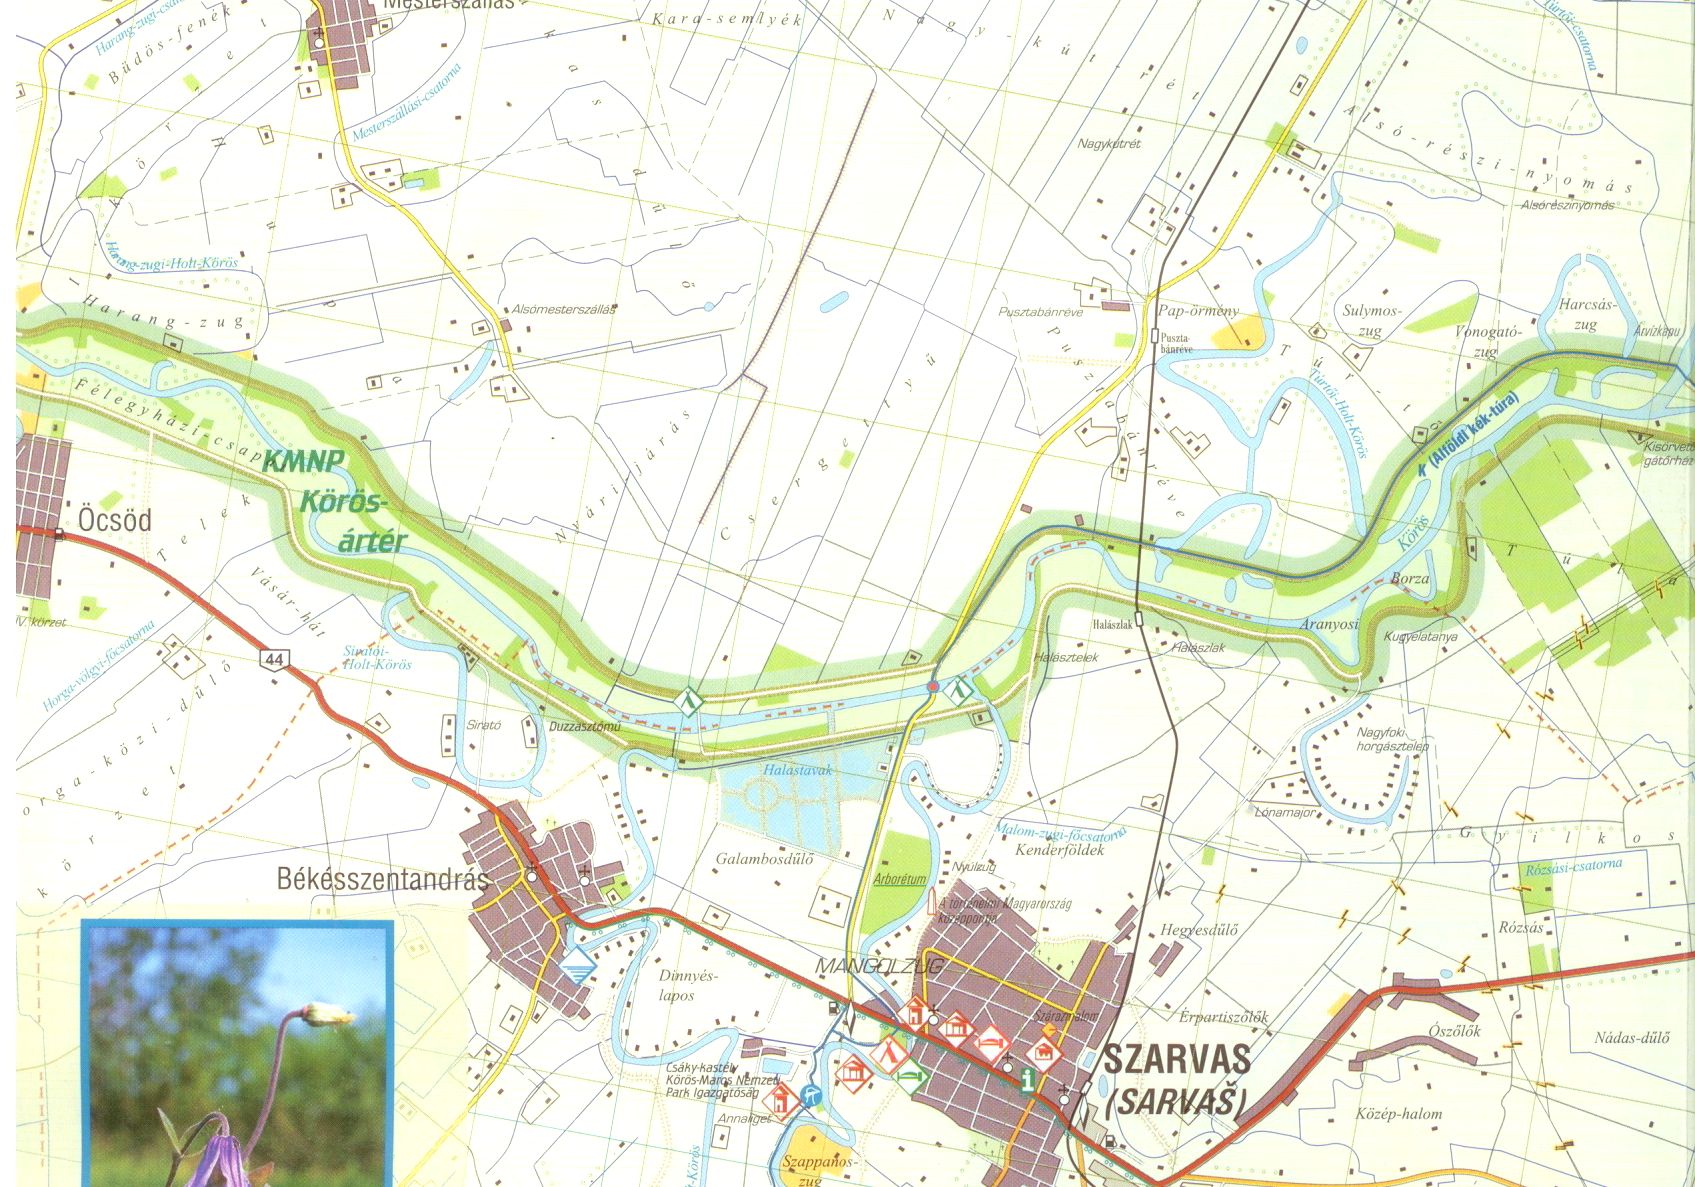 Kőrös-Maros NP map sample